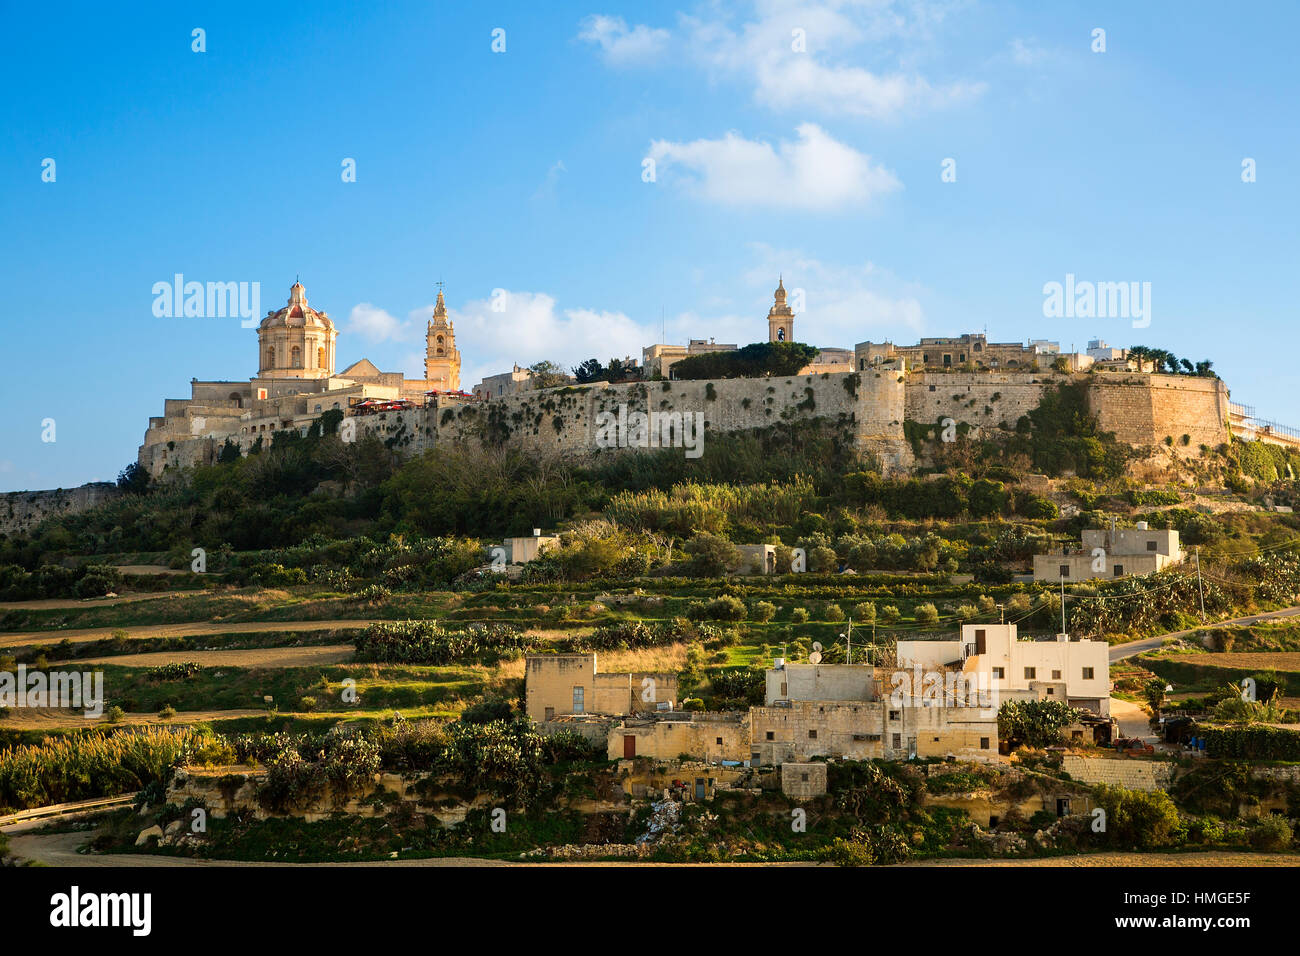 St. Paul's Cathedral and city walls, Mdina, Malta Stock Photo